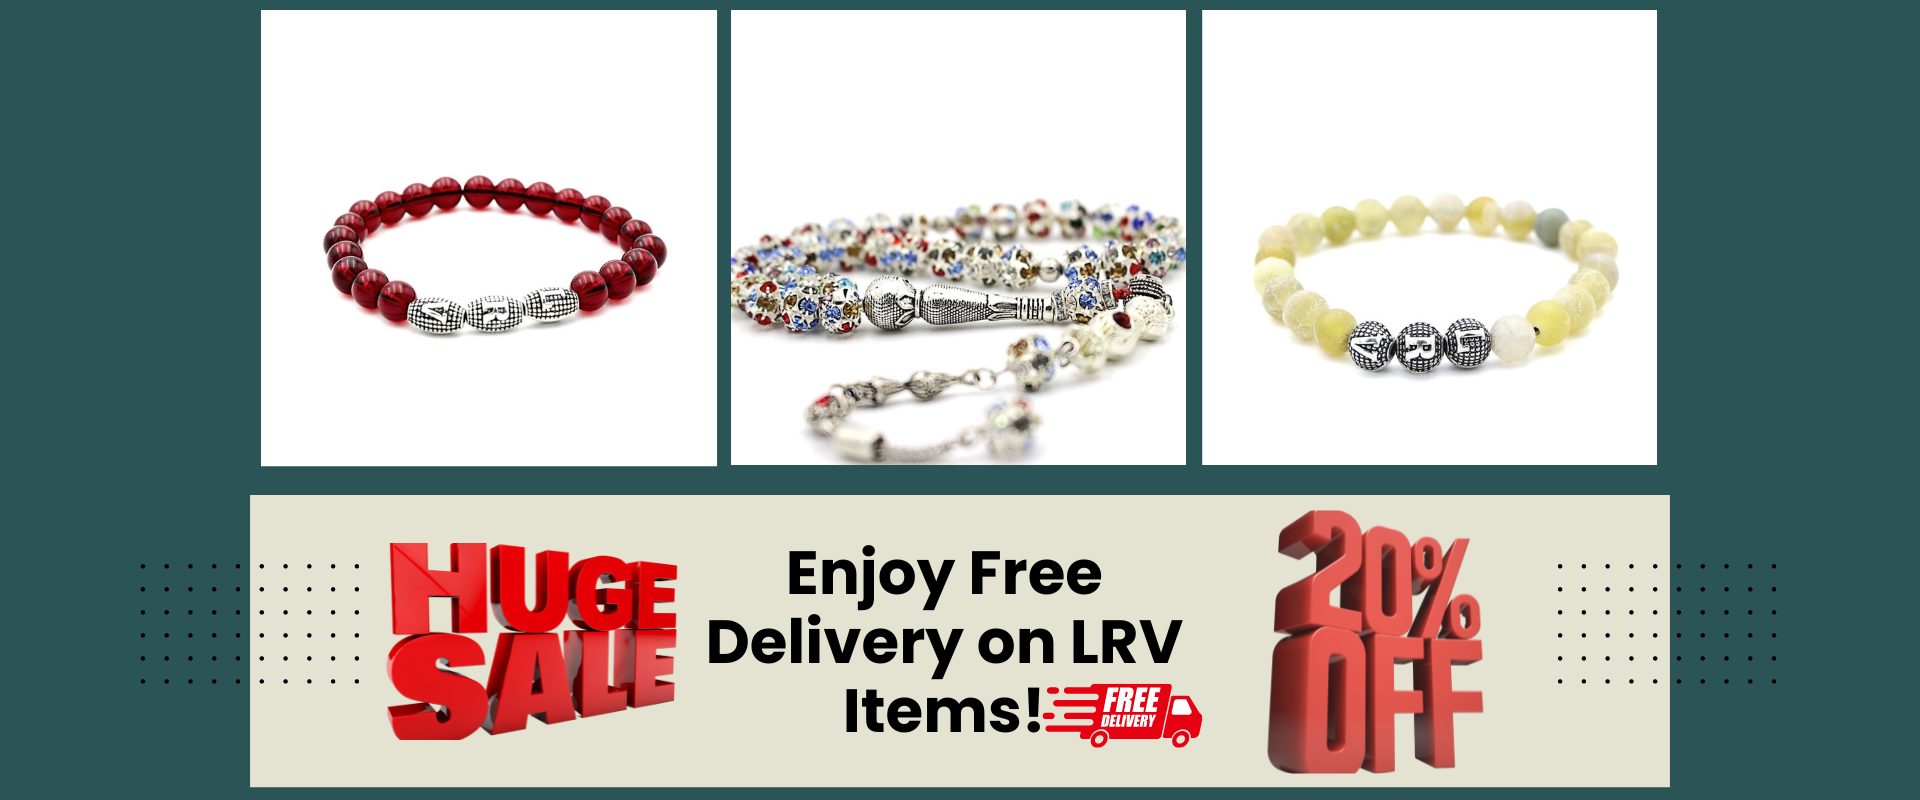 Master Craft Pearls Prayer & Meditation Beads by LRV Luxury R Visible –  Gemstone Jewellery - Tasbih - Meditation & Prayer Beads